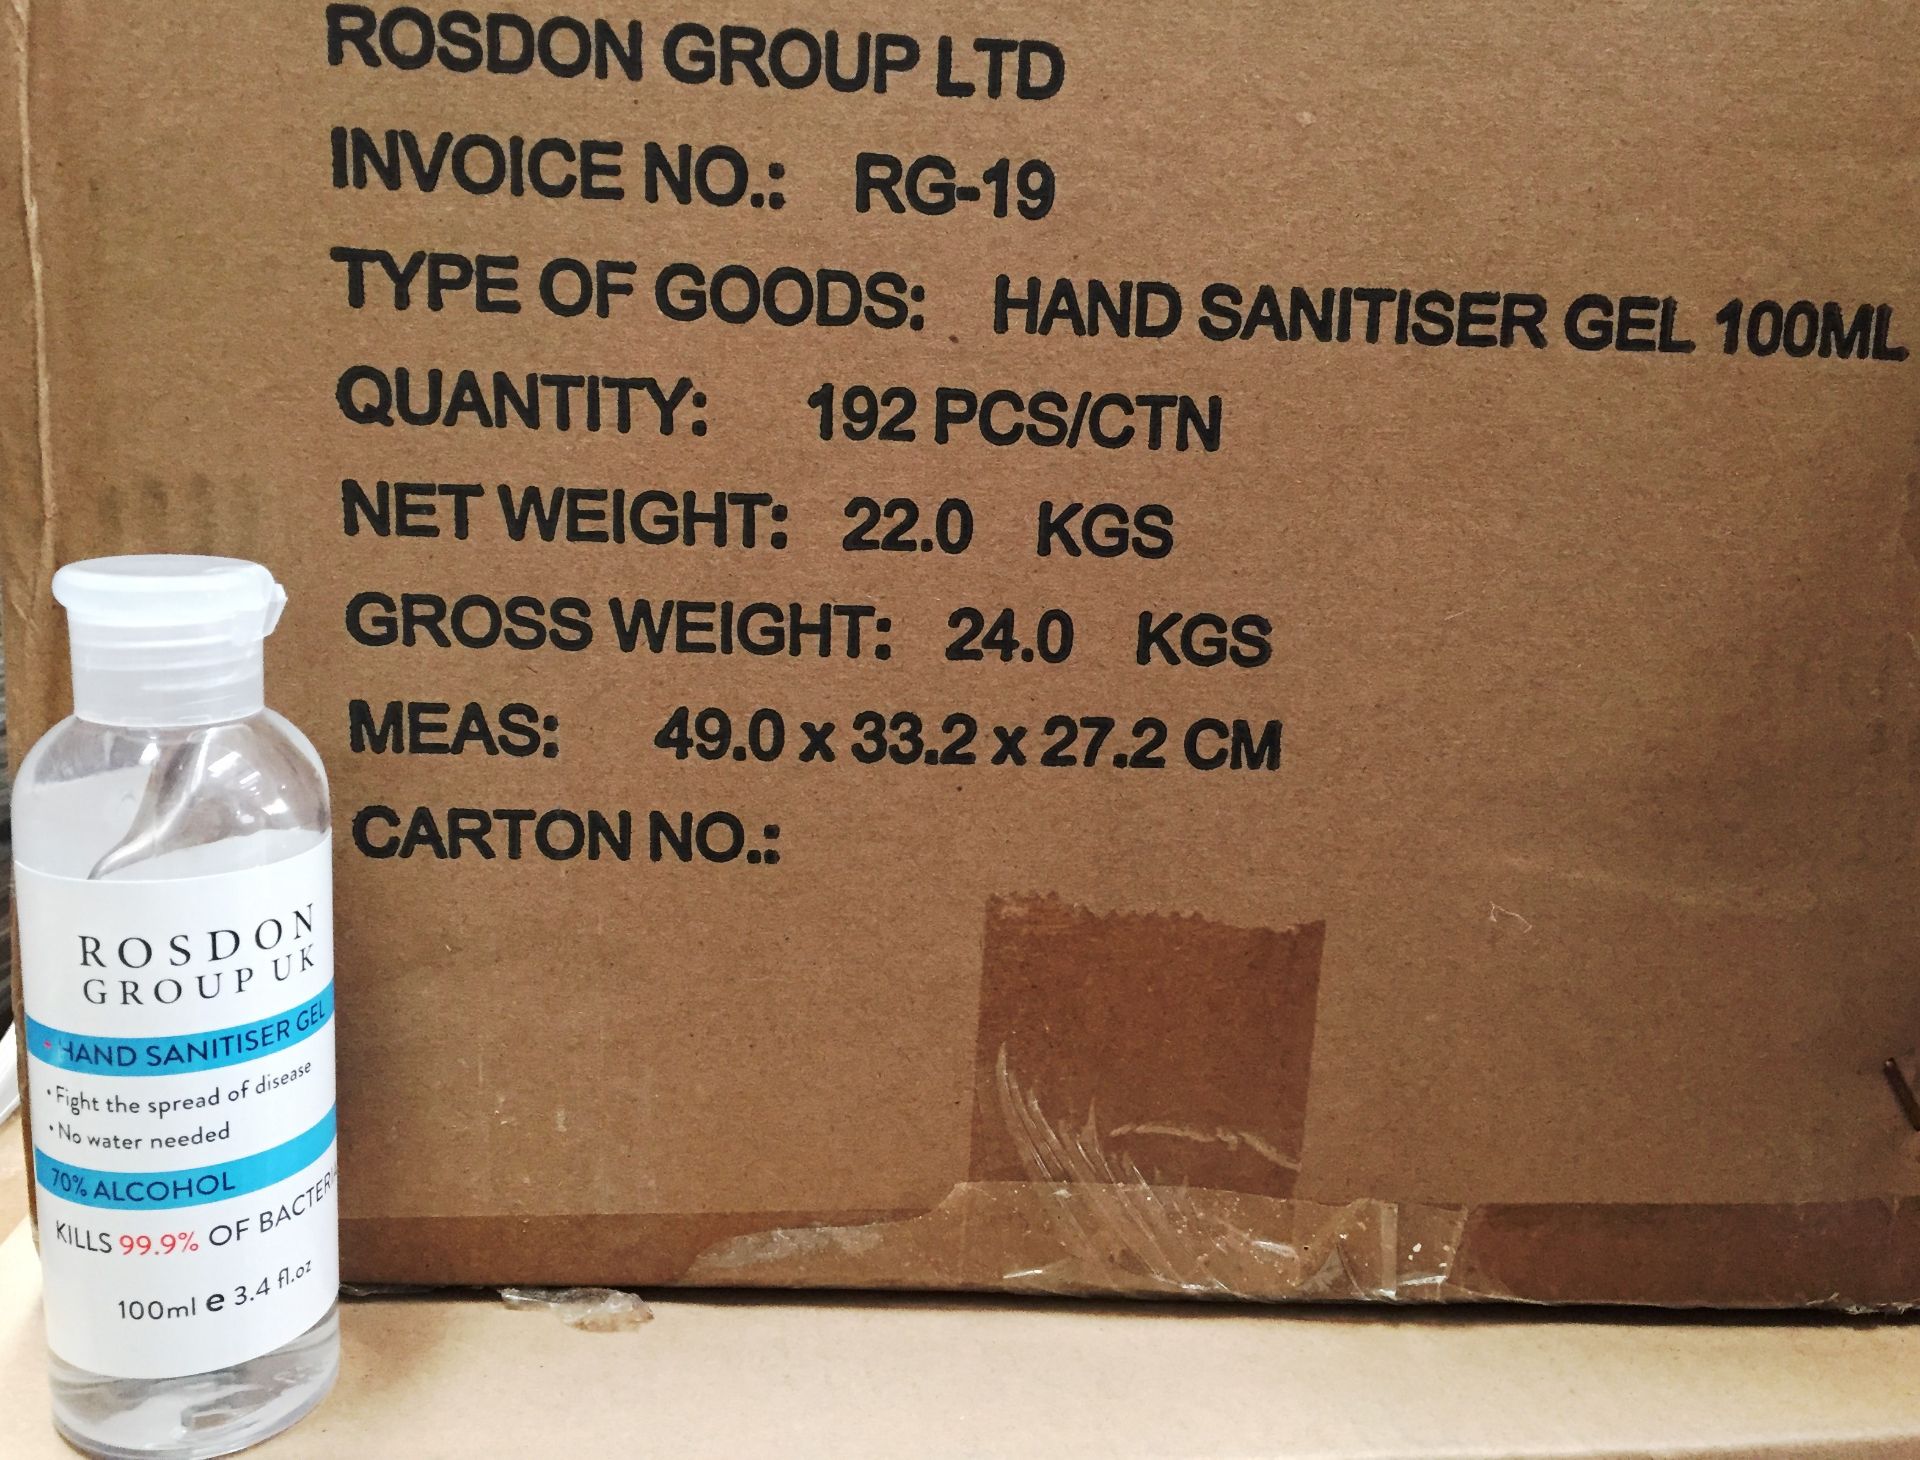 1 x box Rosdon Group Ltd 100ml hand sanitiser (192 units per box) - Image 3 of 3